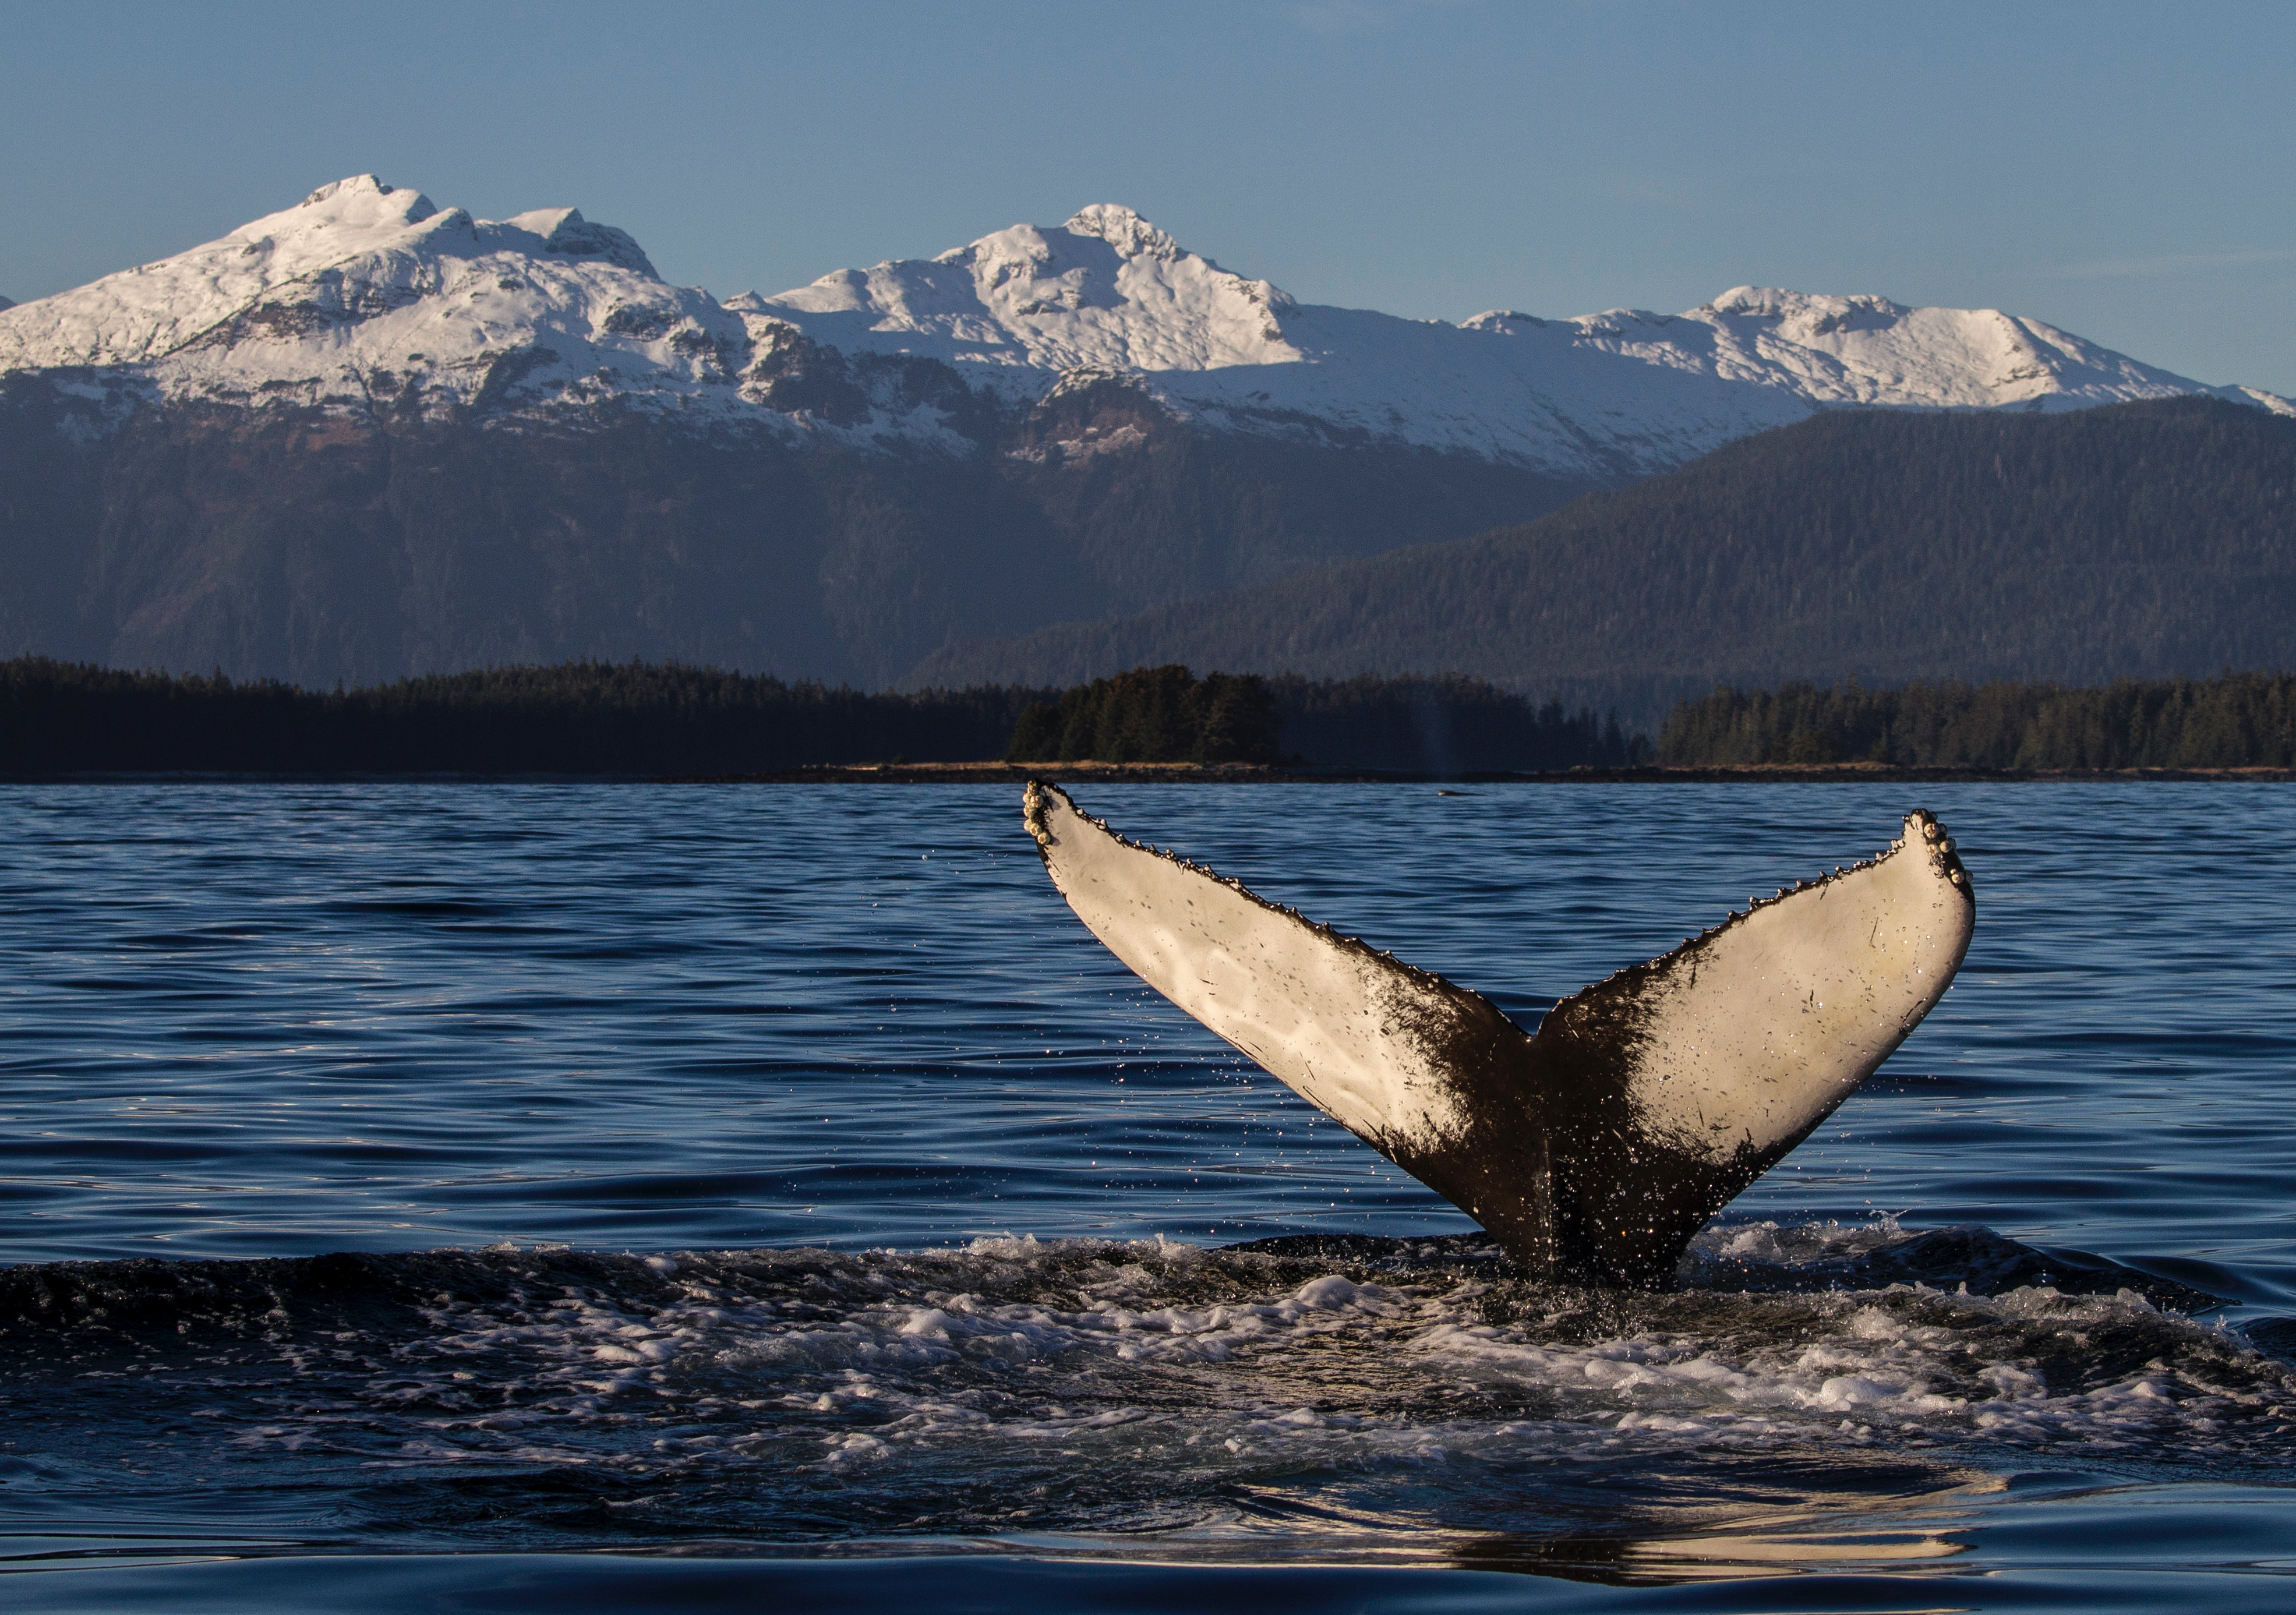 Photograph of humpback whale taken during Oregon State University Marine Mammal Institutes 2014 tagging field season in SE Alaska